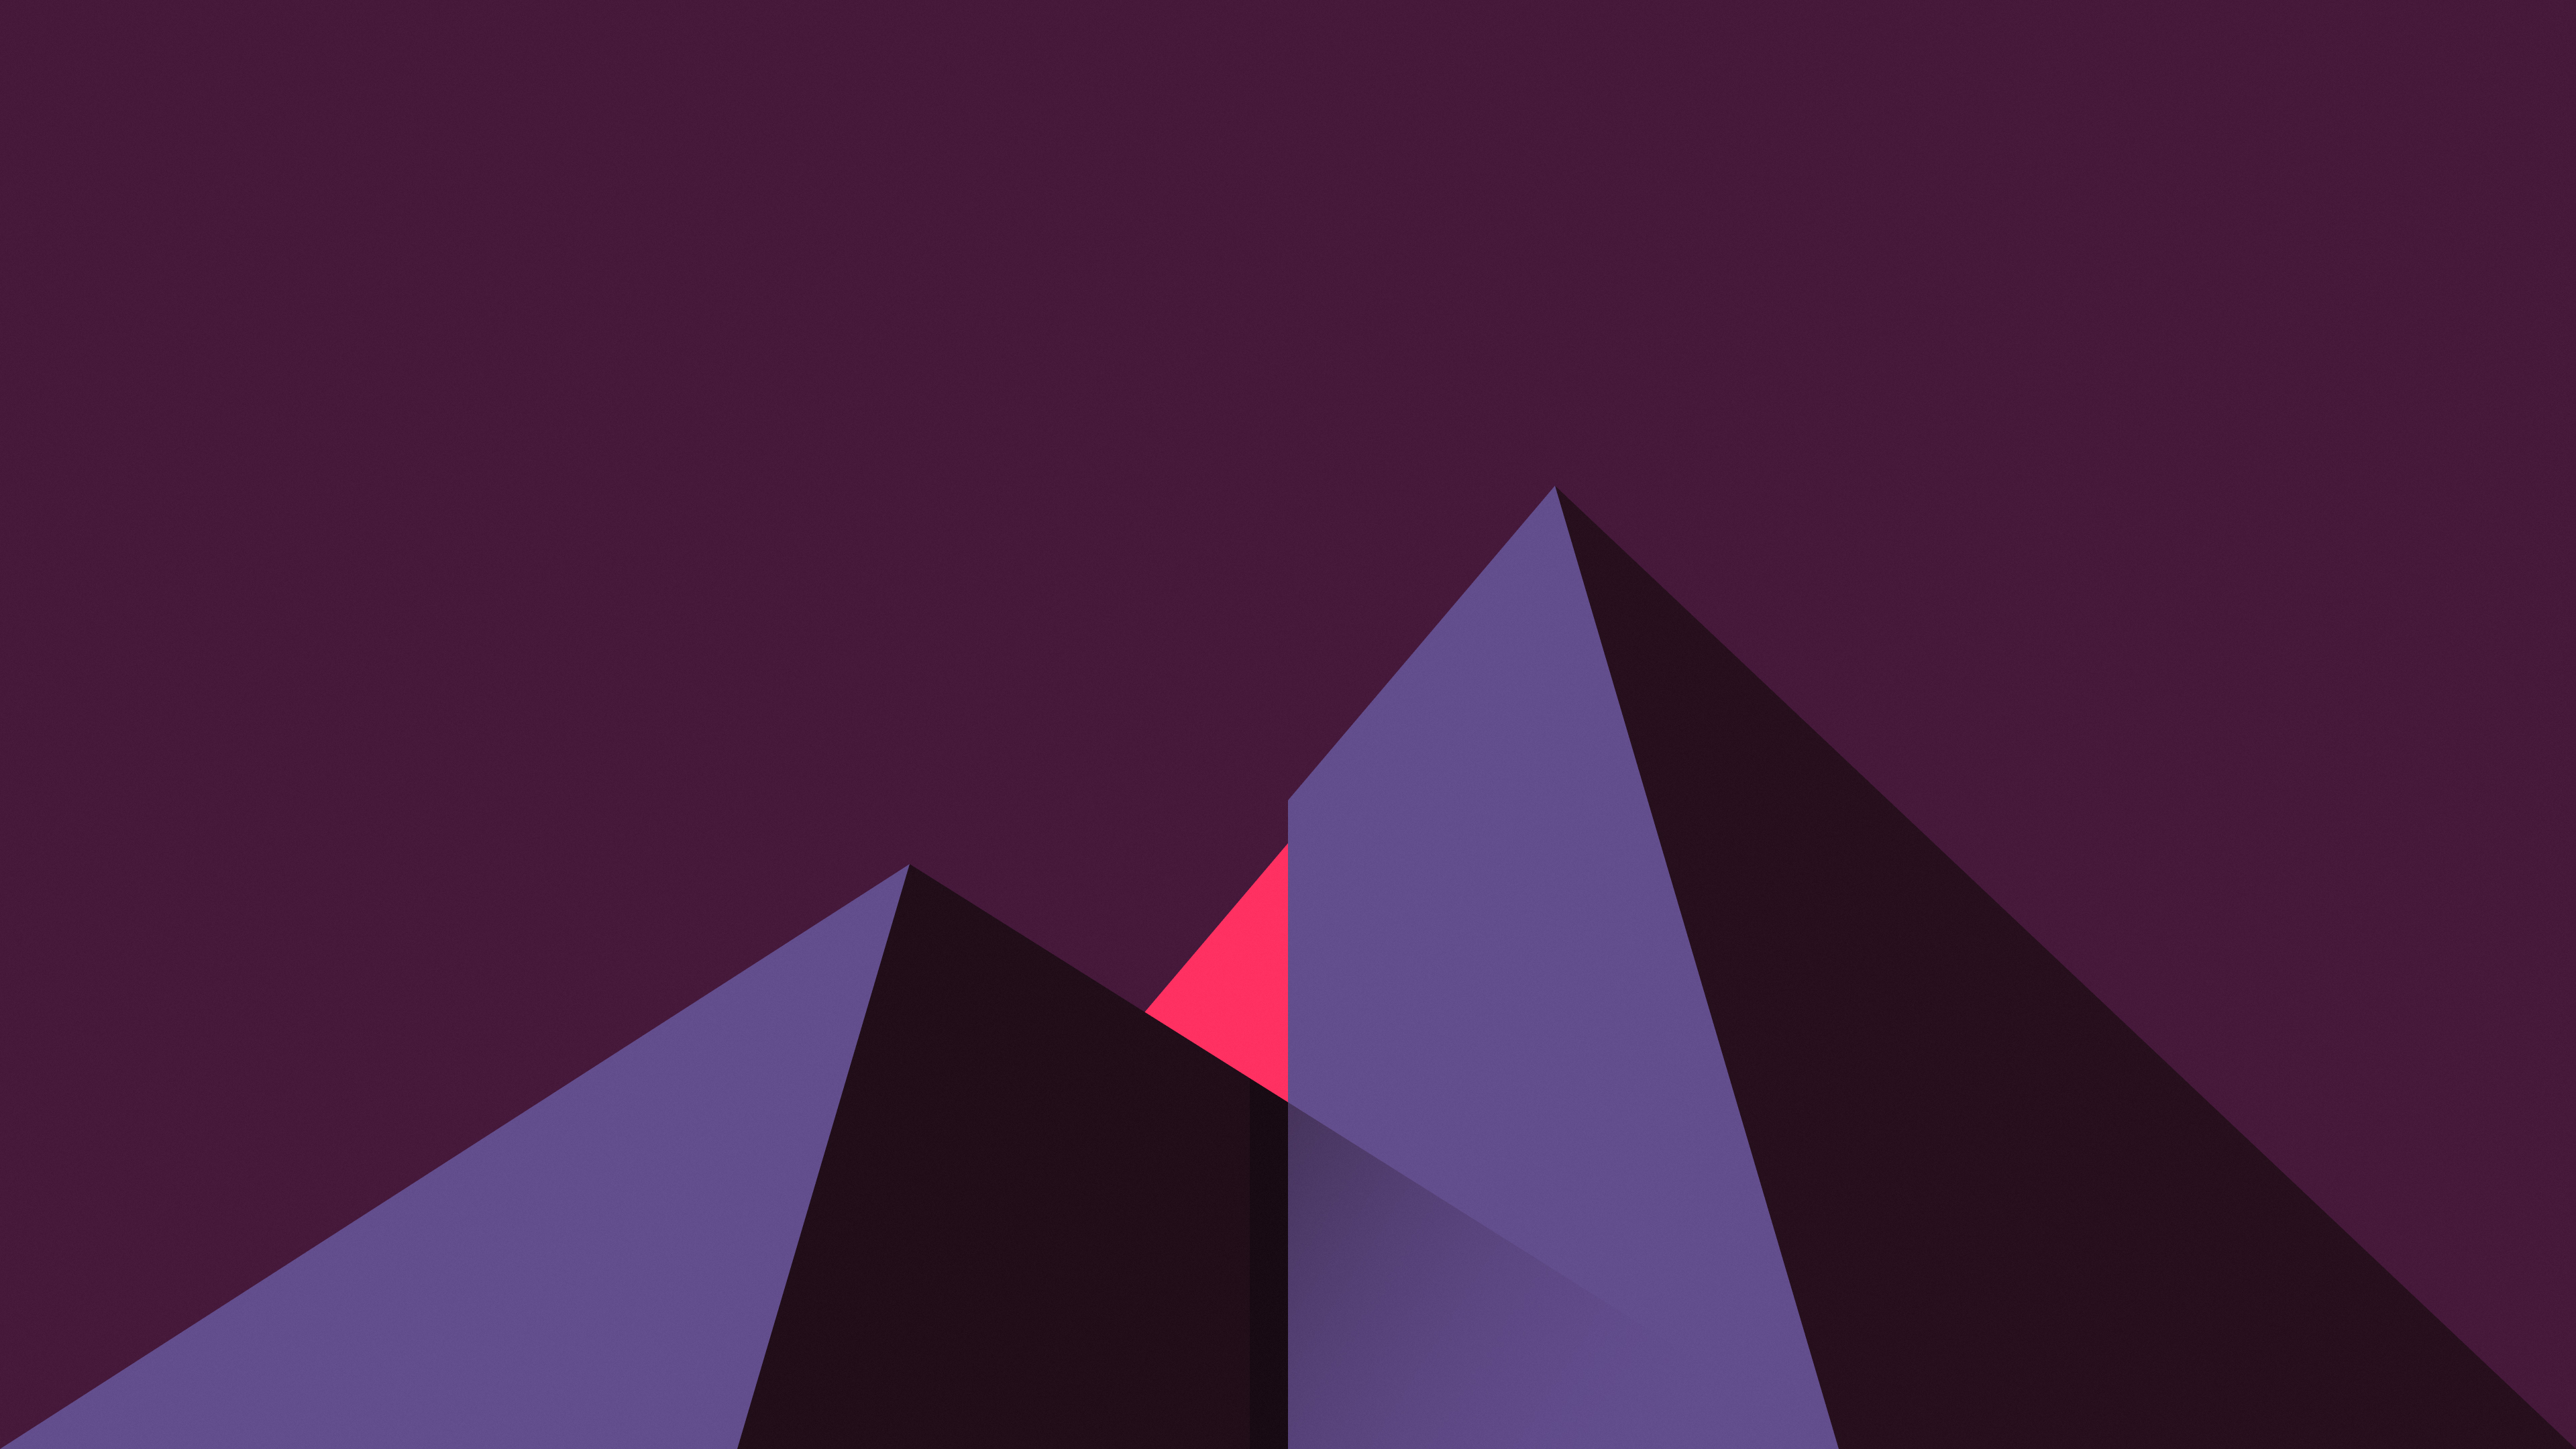 General 3840x2160 digital art artwork illustration minimalism mountains flat art pyramid abstract purple RBatinic 4K shapes simple background